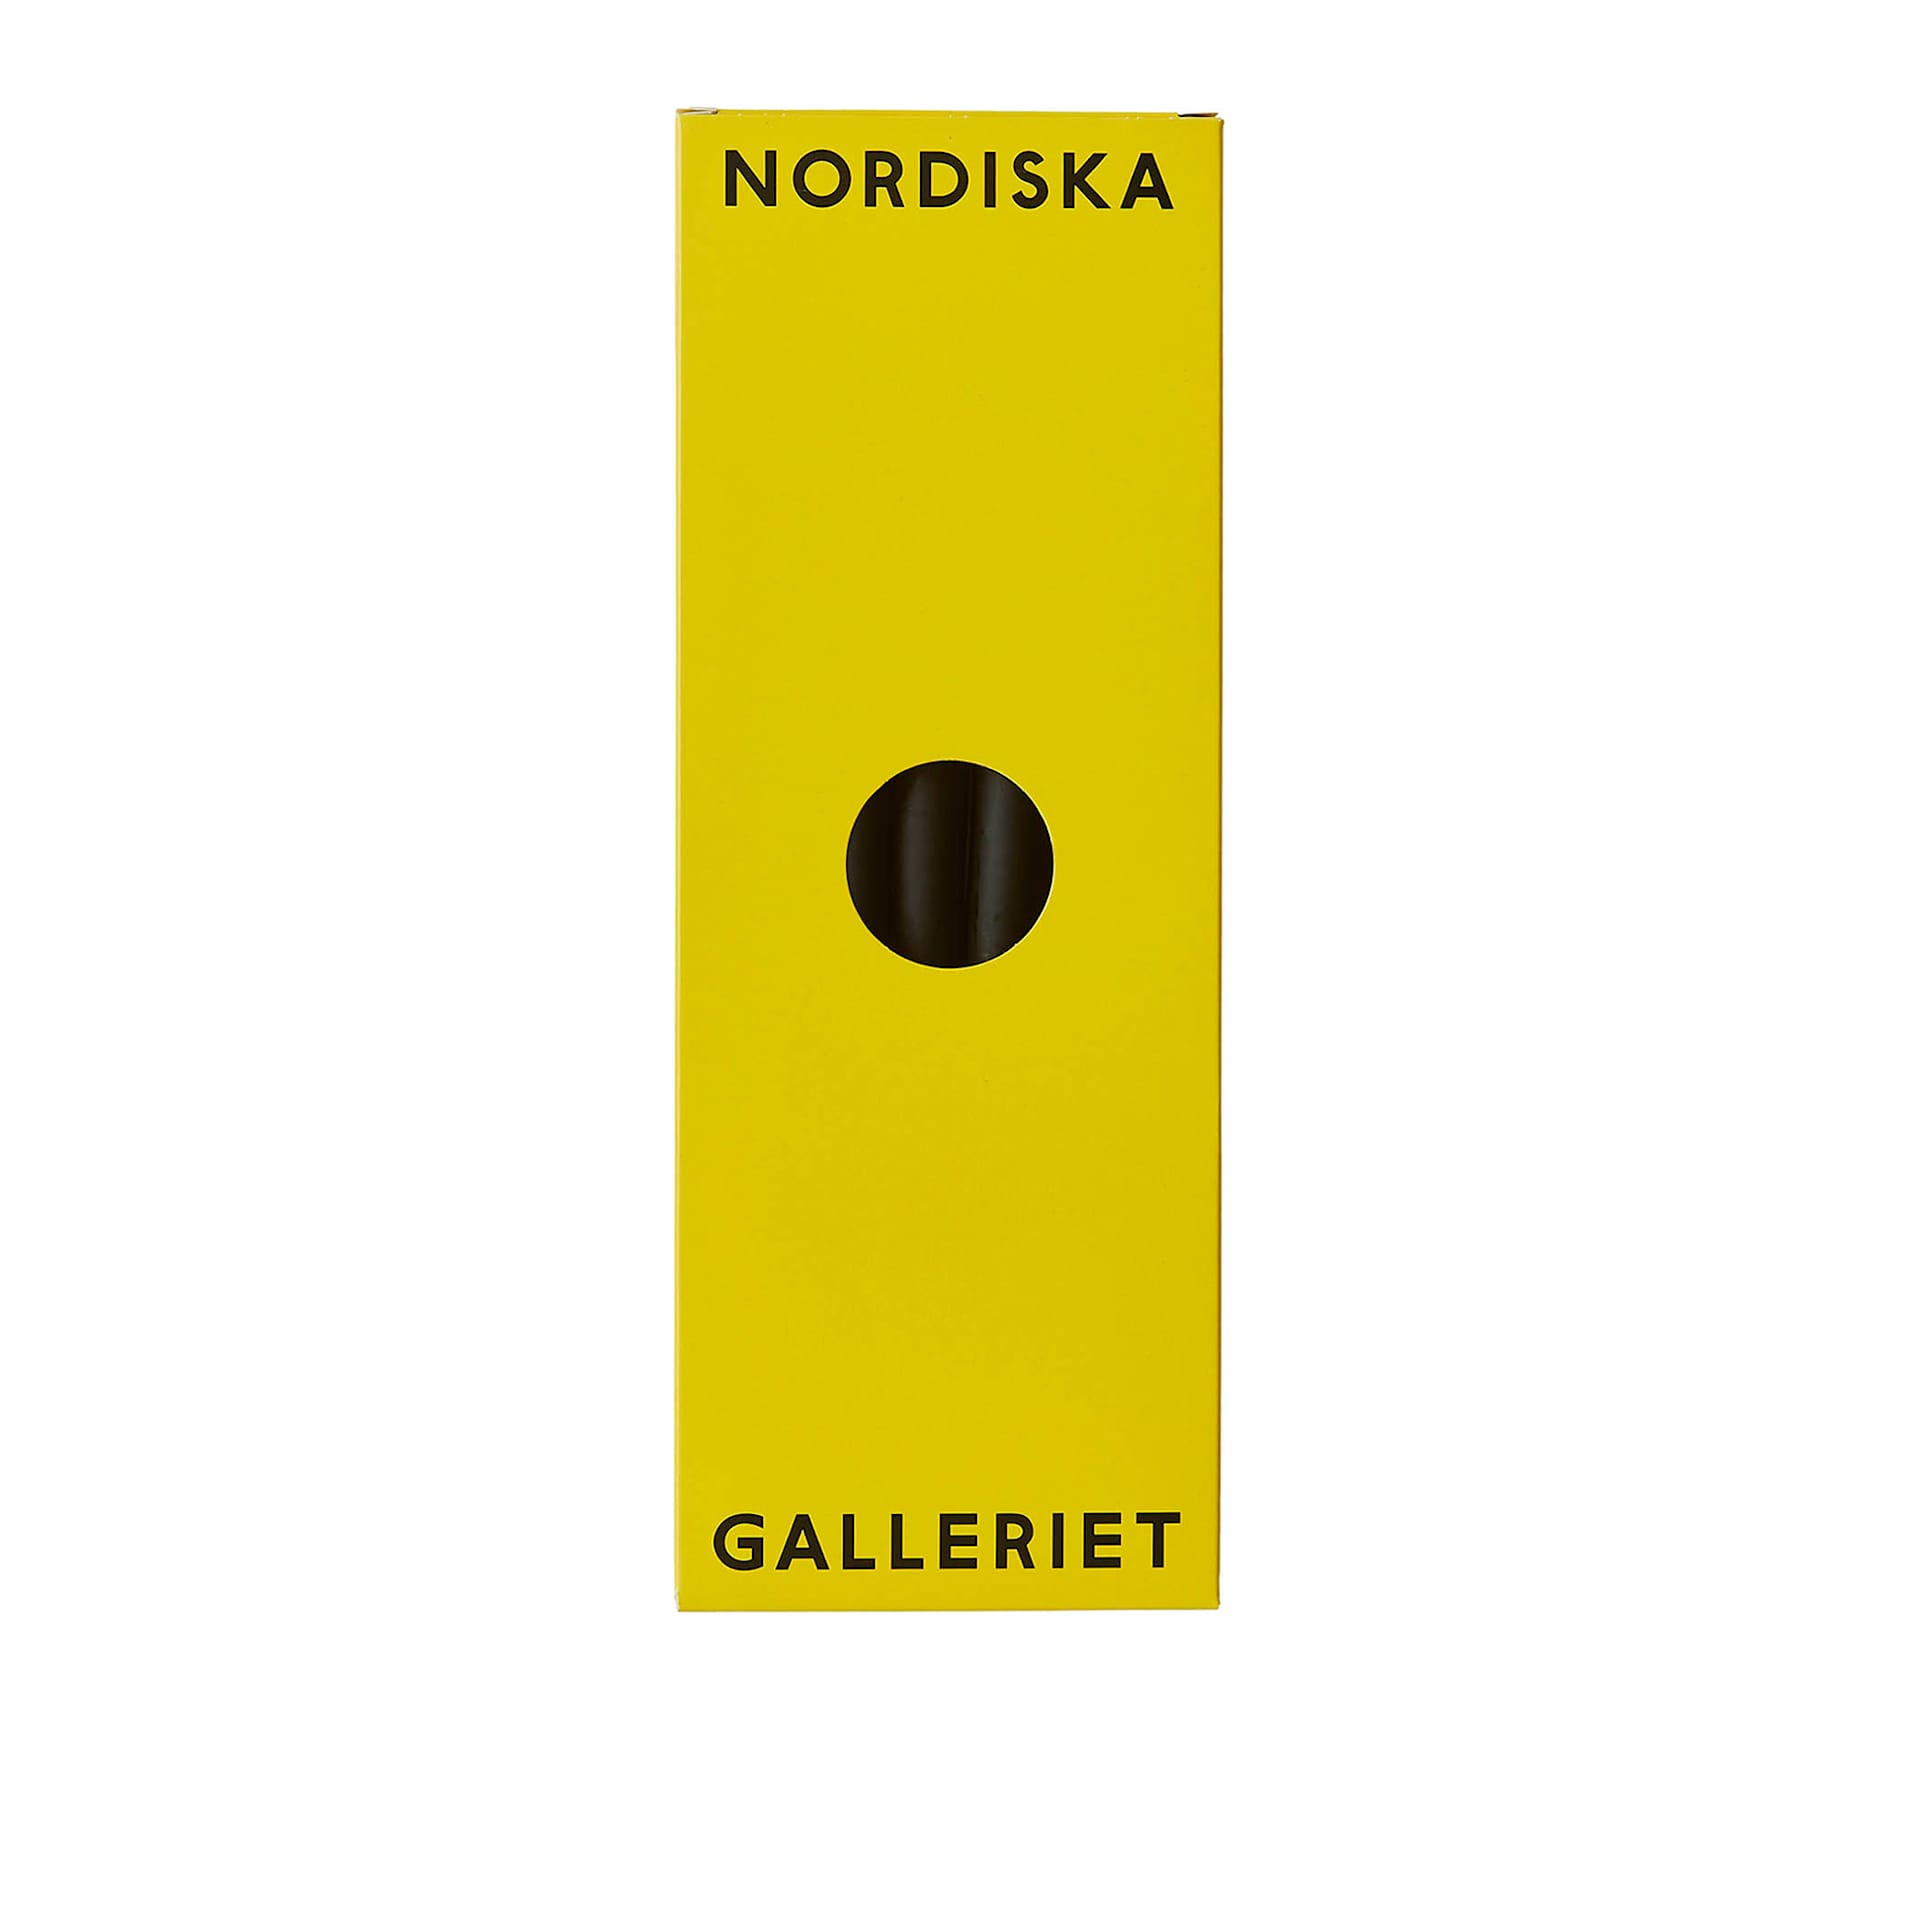 Nordiska Galleriet Candles Pack of 6 - Black - Nordiska Galleriet - NO GA